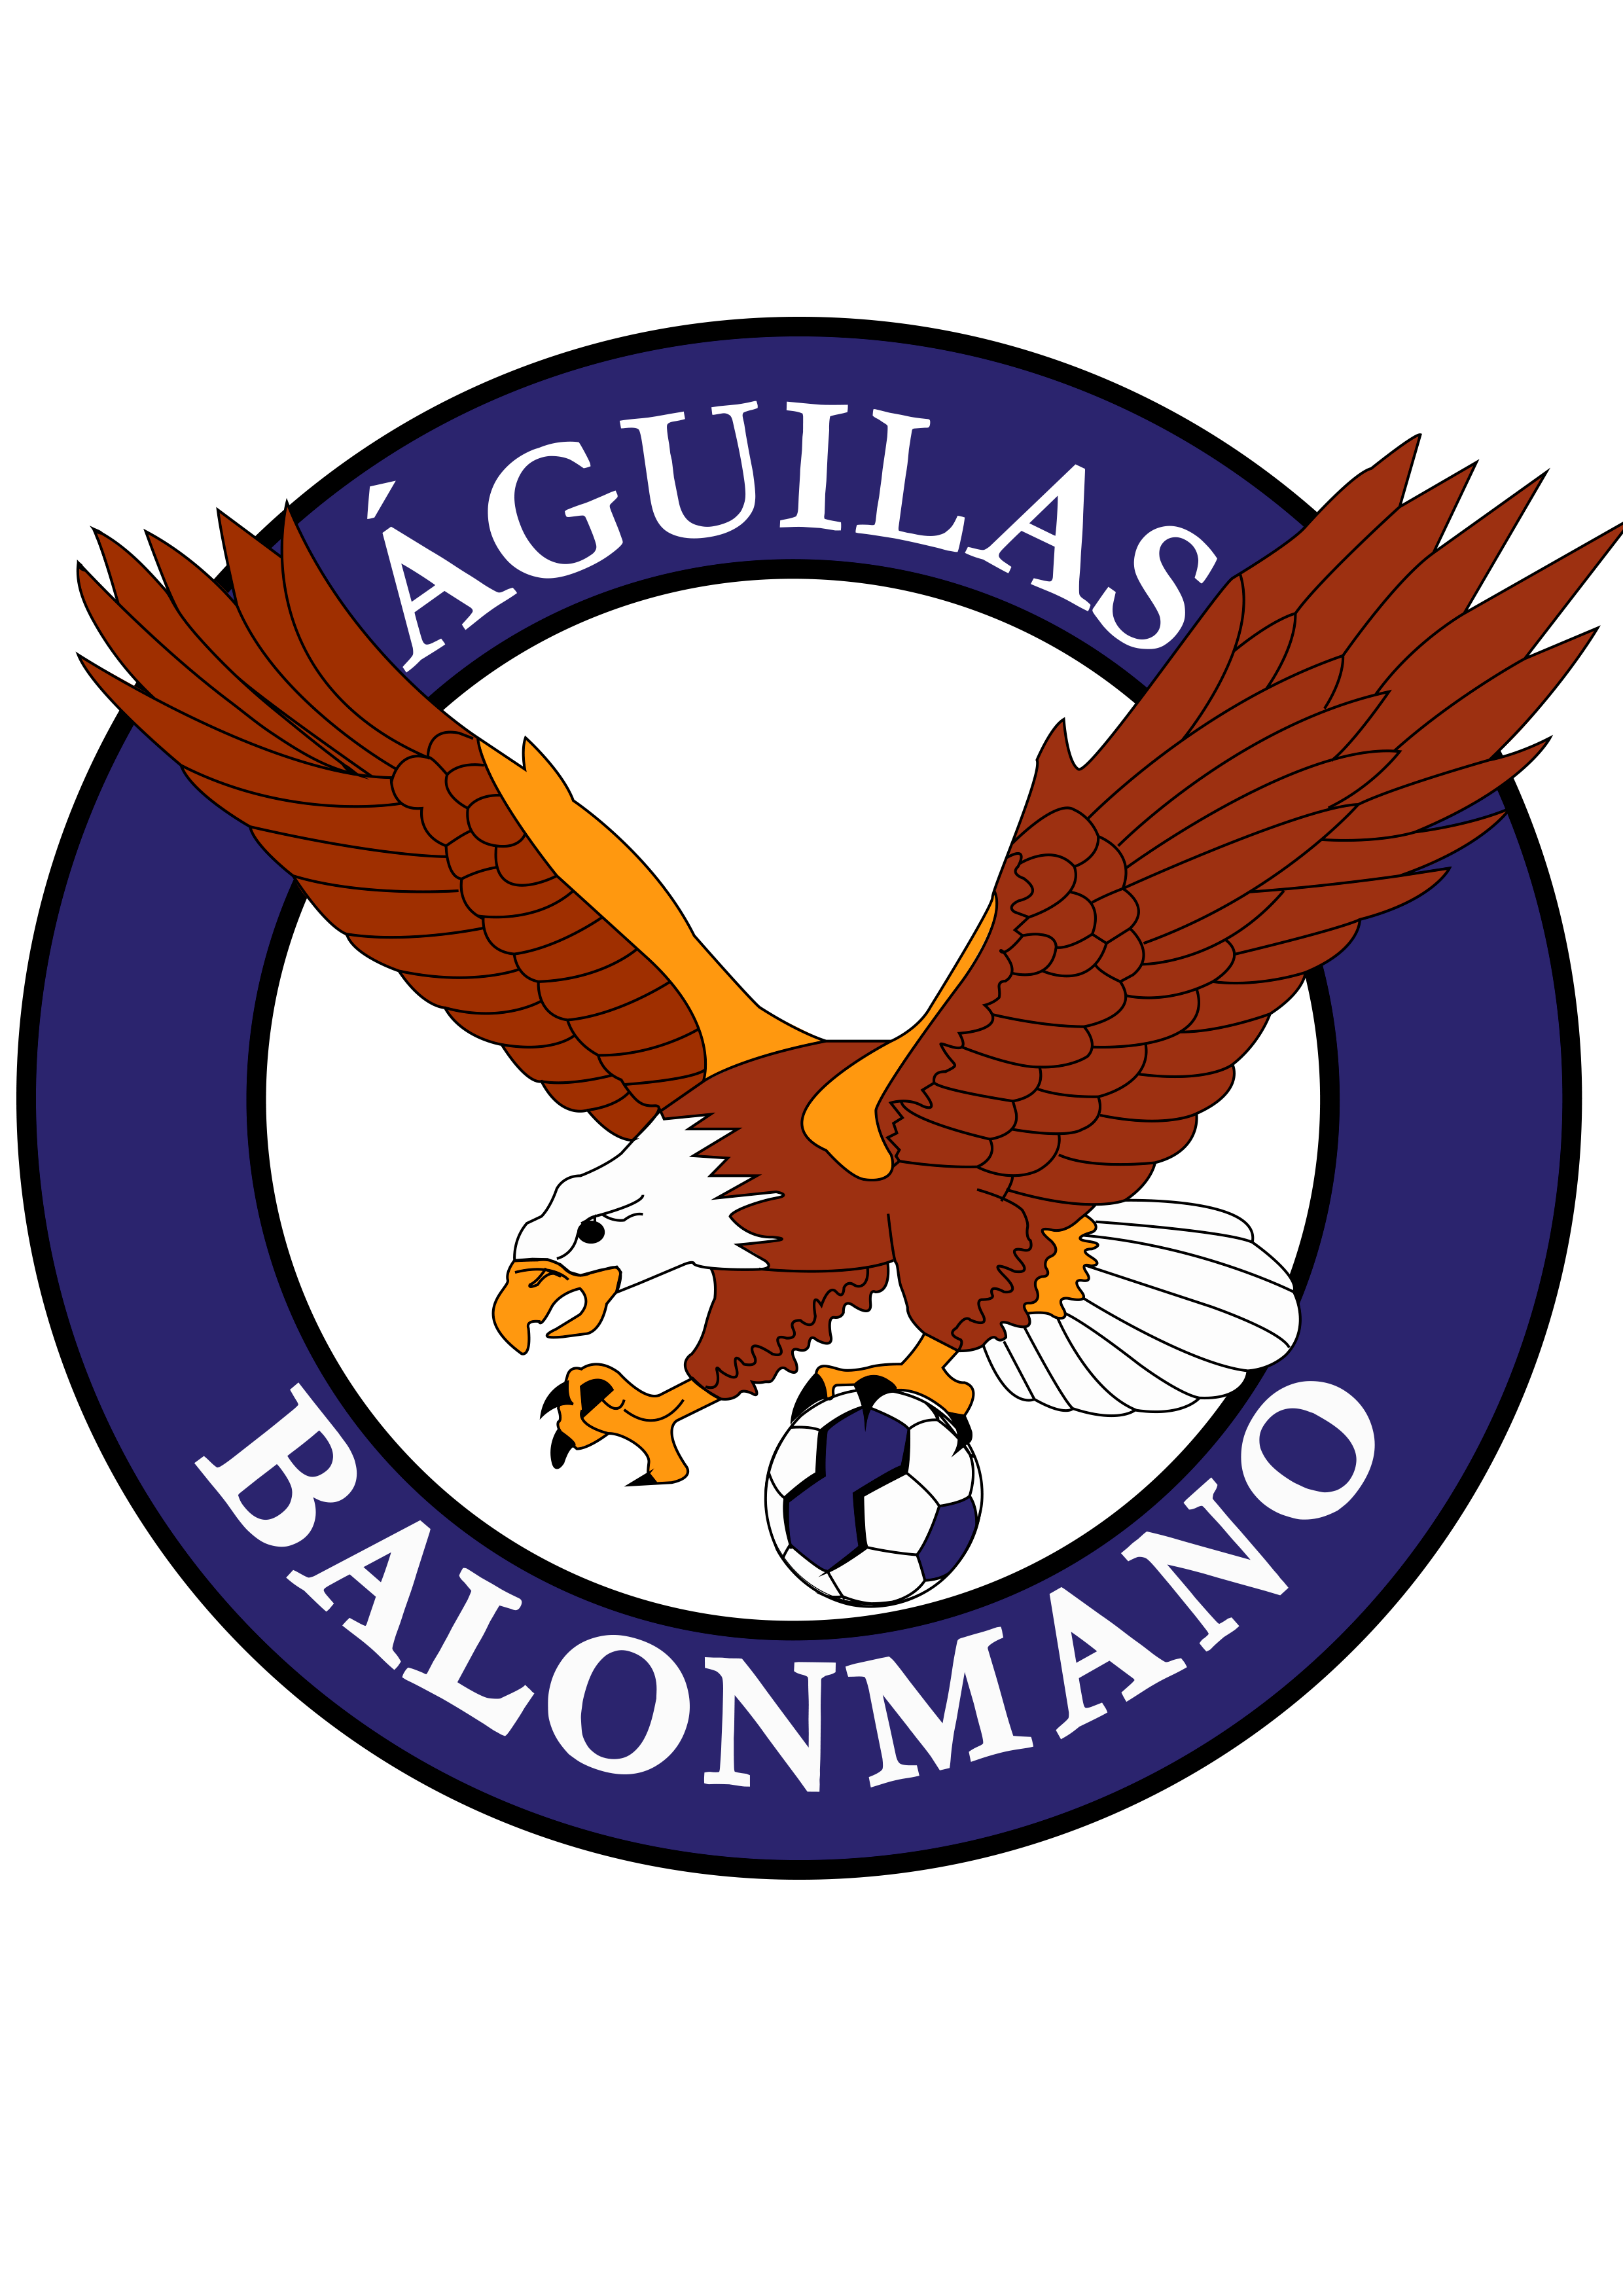 CLUB BALONMANO AGUILAS